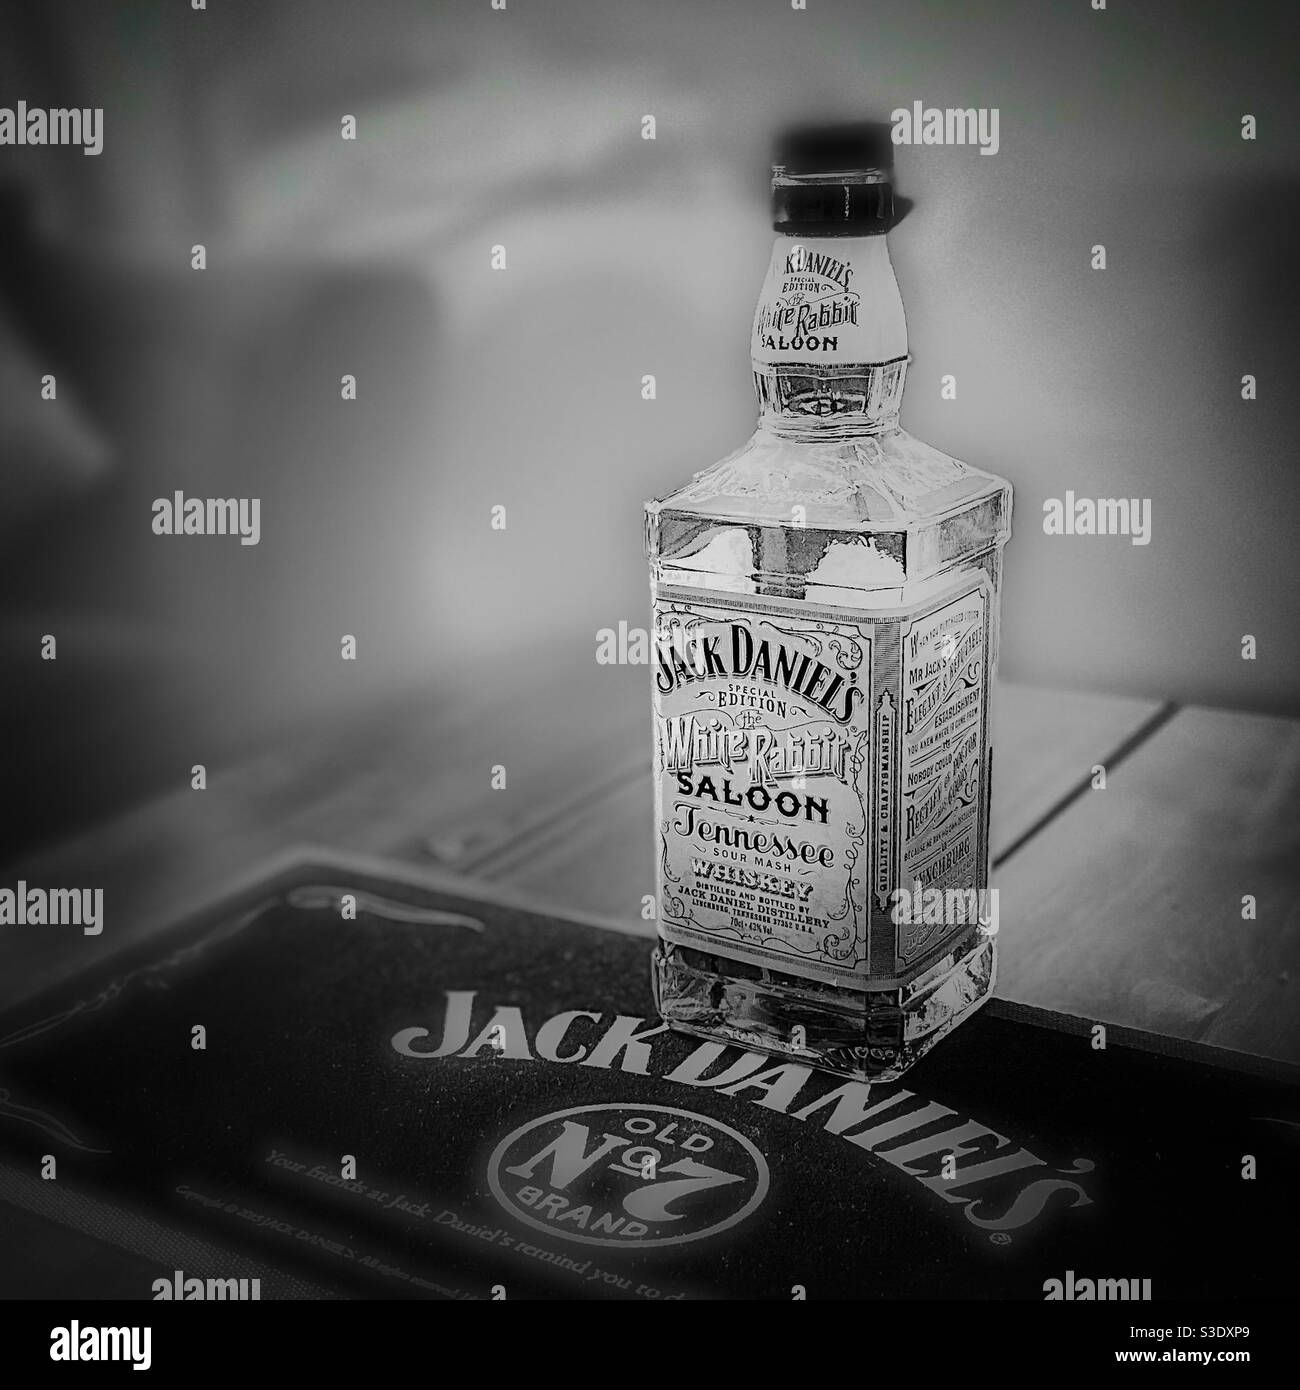 Jack Daniel's Foto de stock